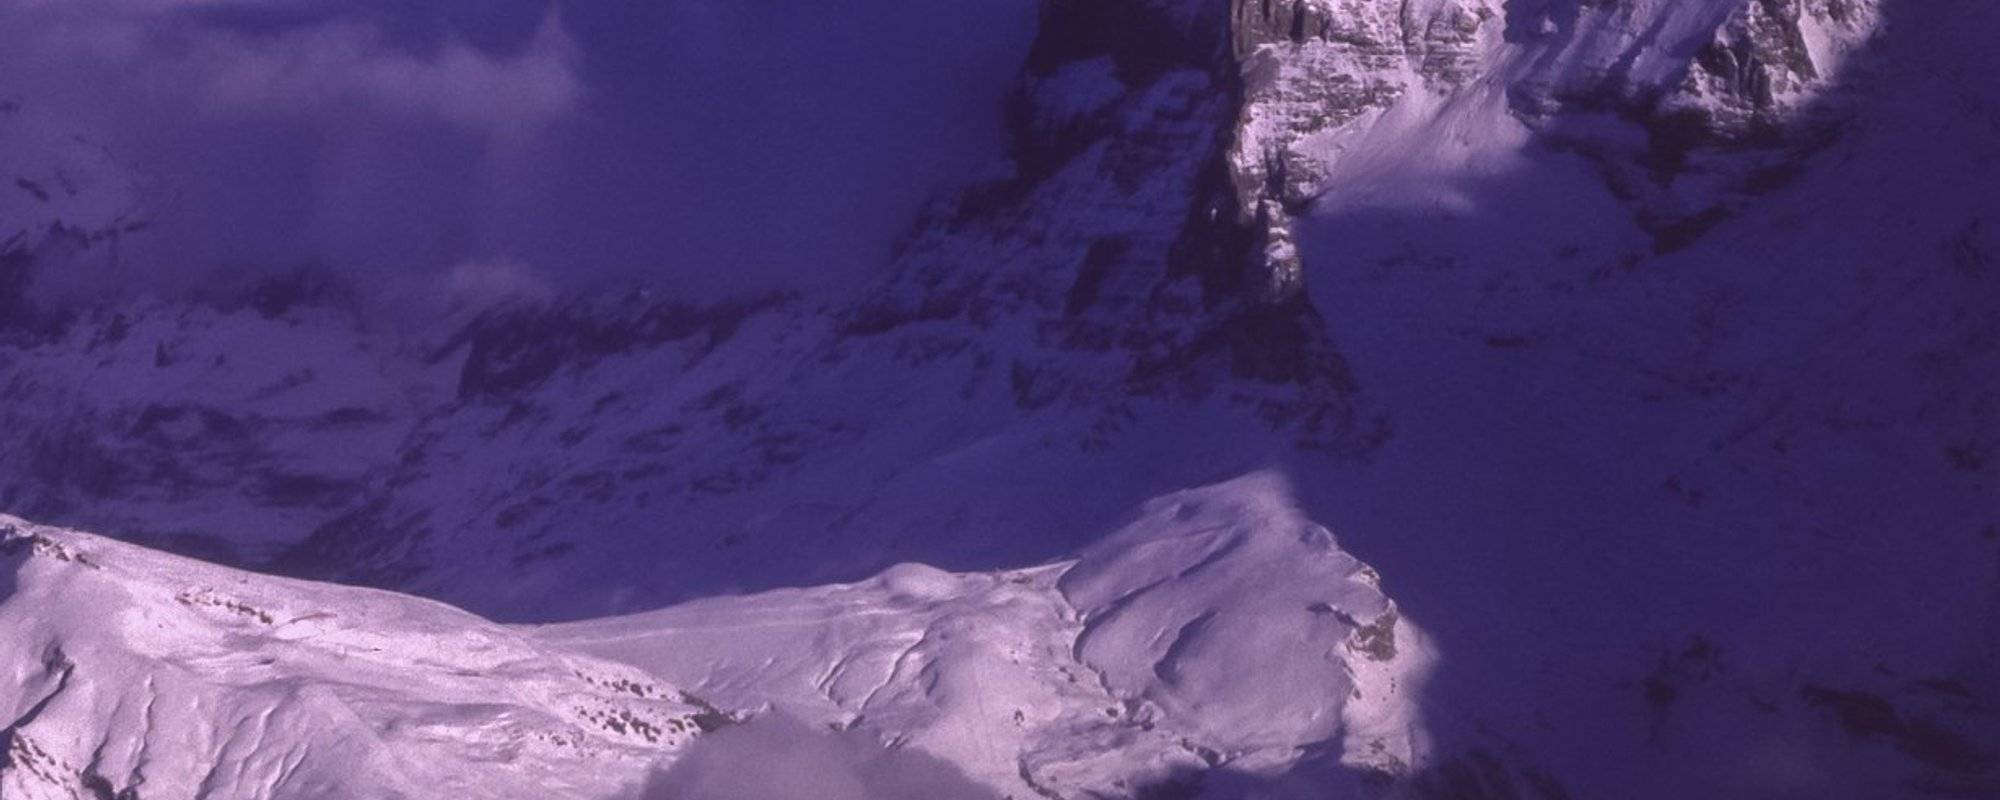 The Eiger and Slide Scanning